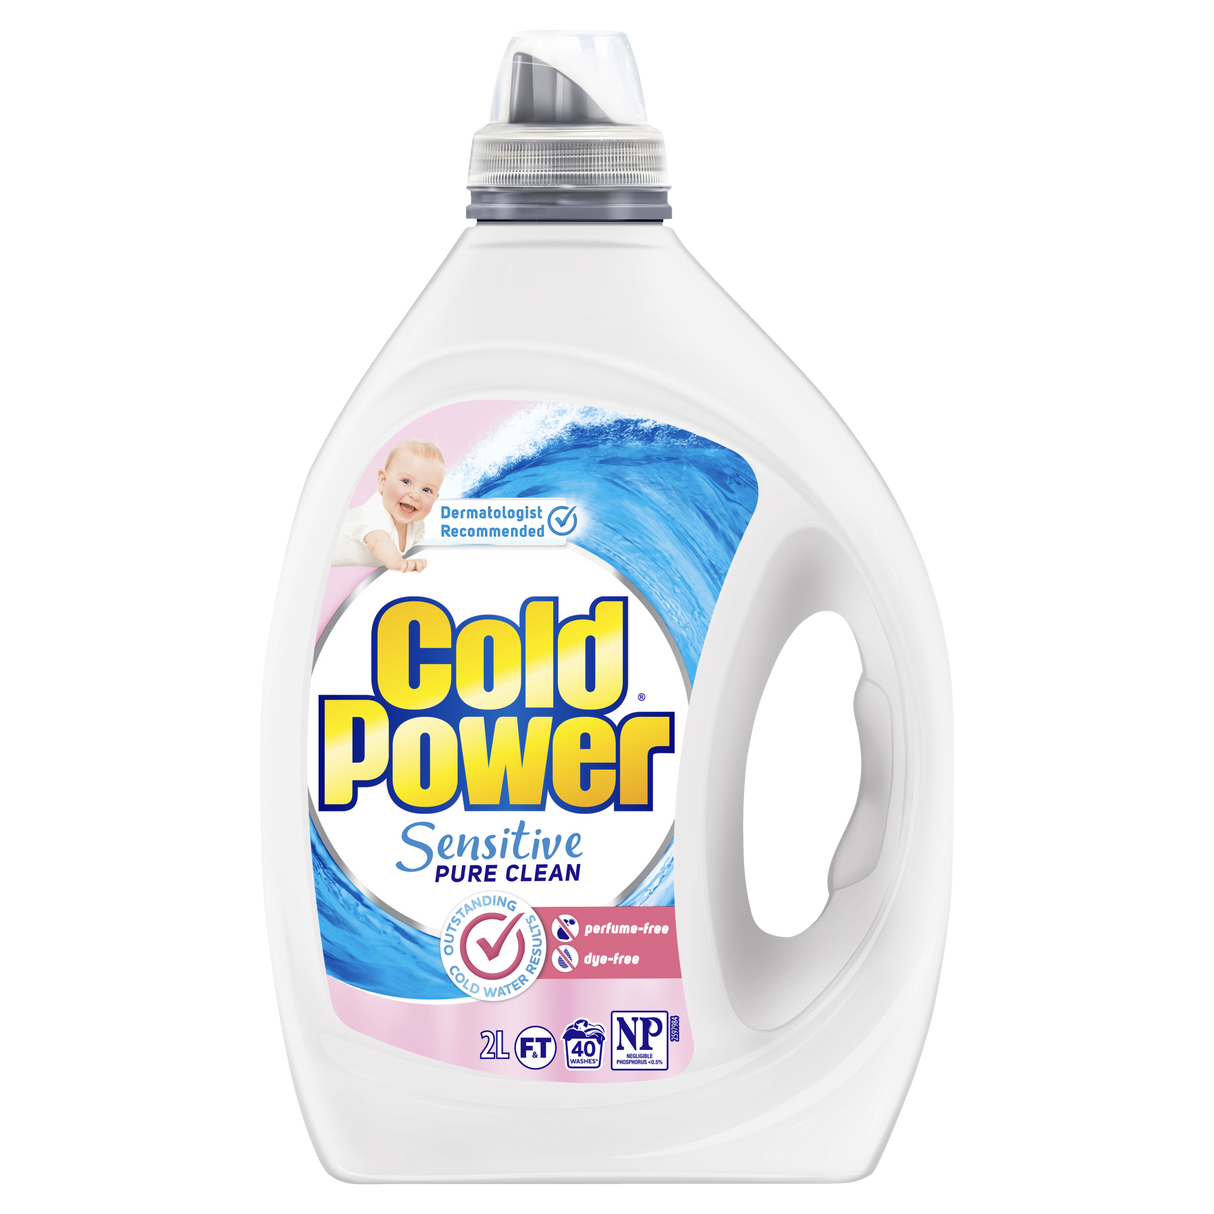 Cold Power Sensitive Pure Clean Washing Liquid Laundry Detergent 2l